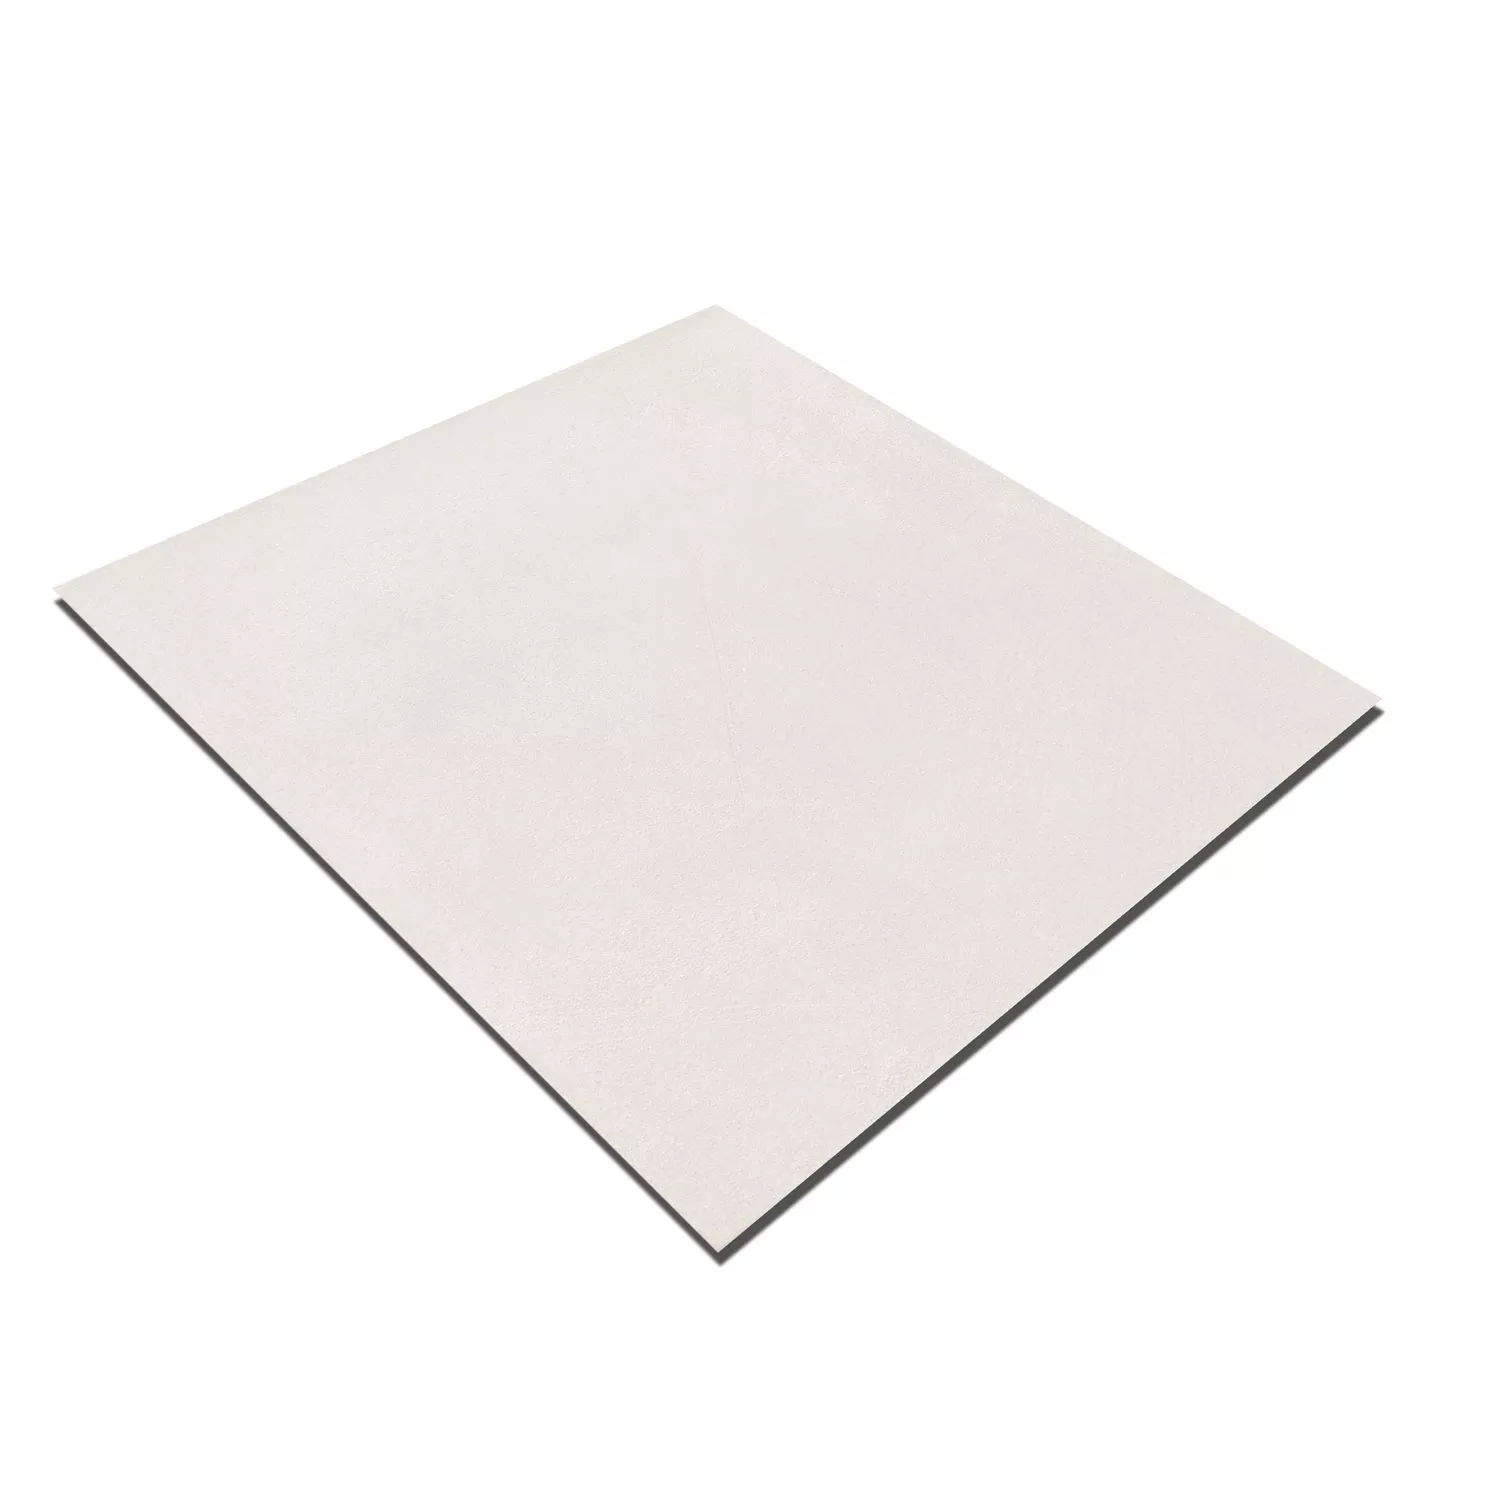 Cement Tiles Optic Arena Basic Tile White 18,6x18,6cm